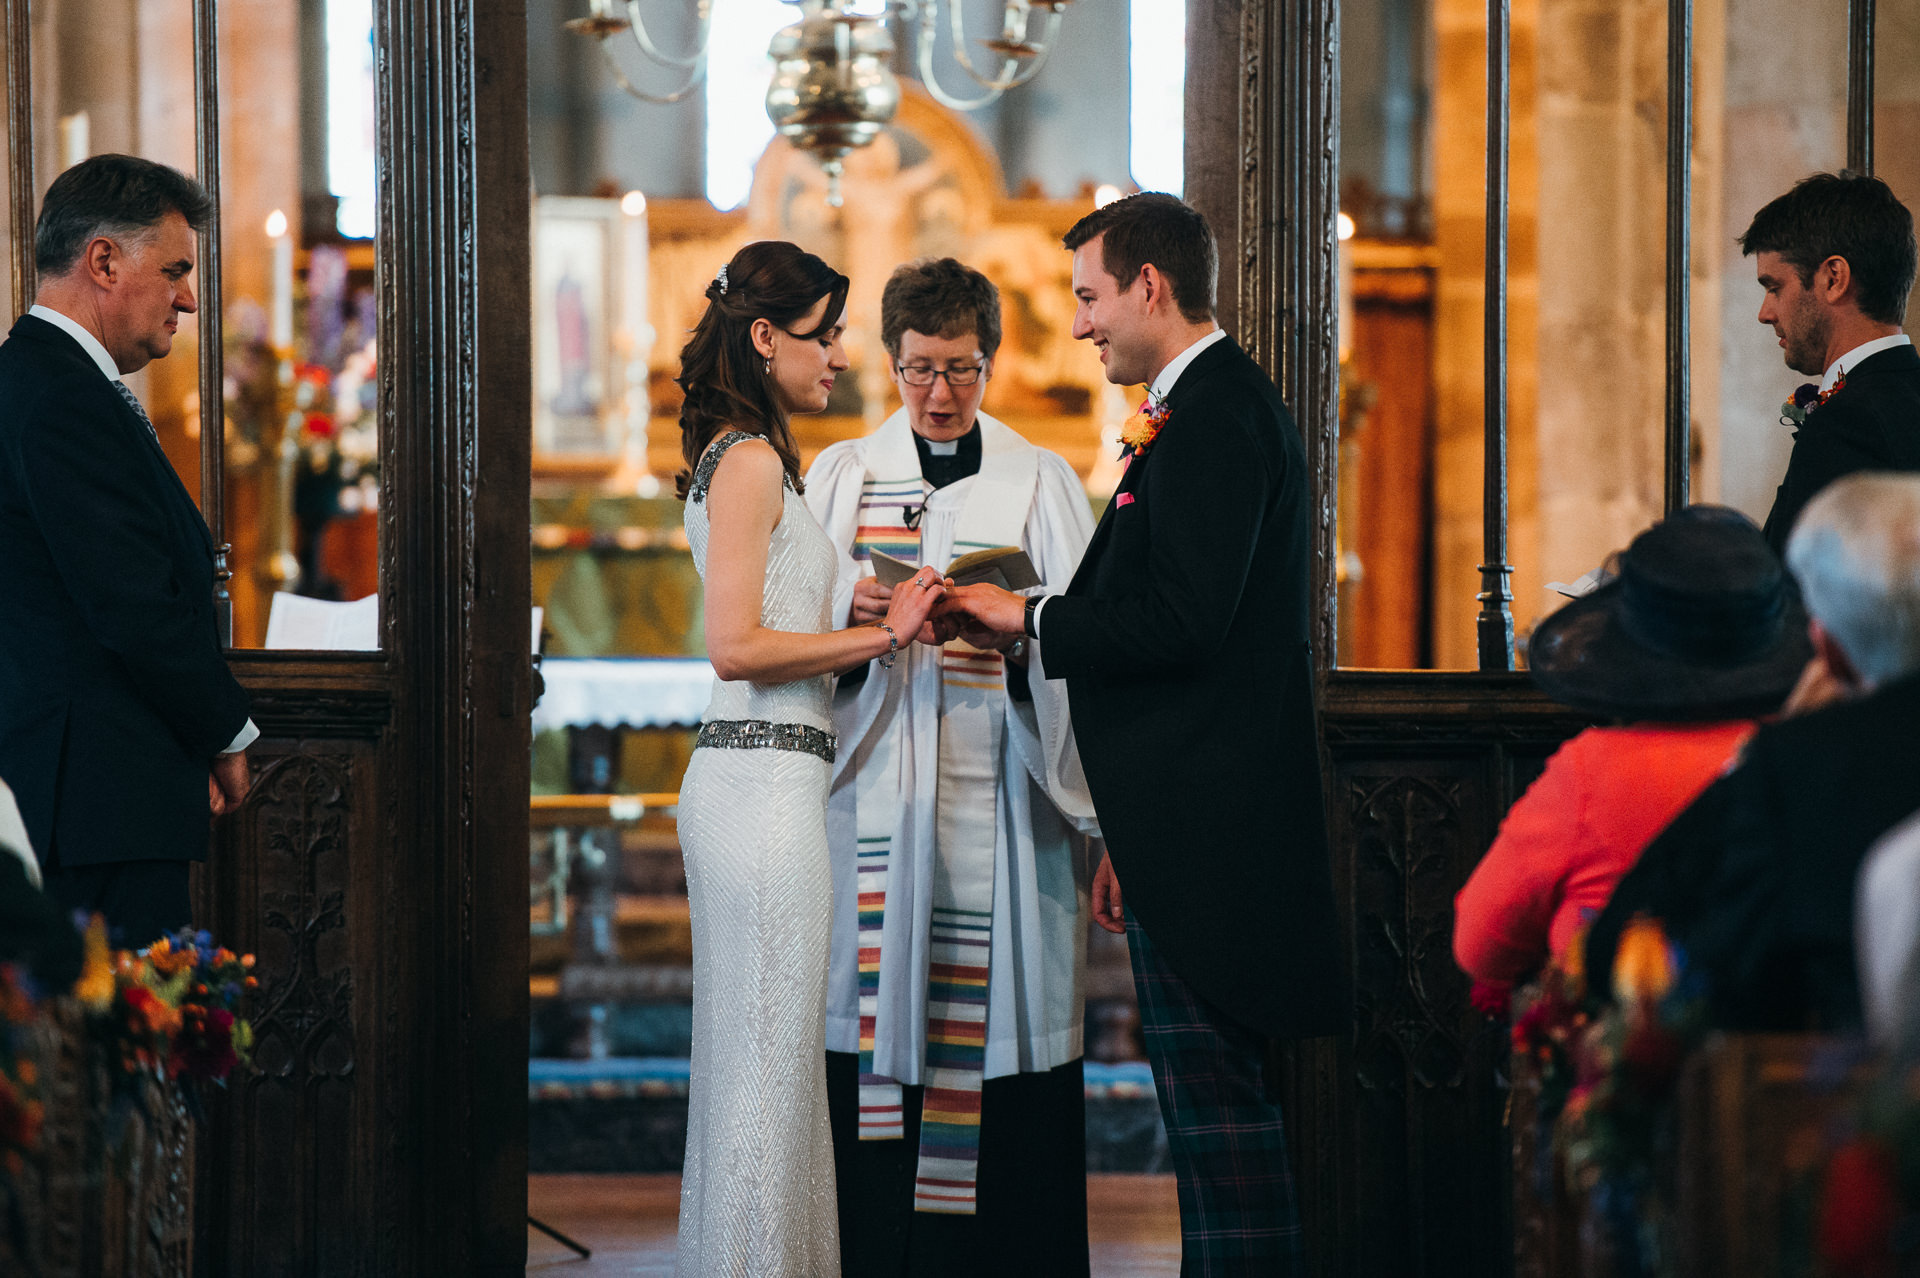 Dunster church wedding vows 